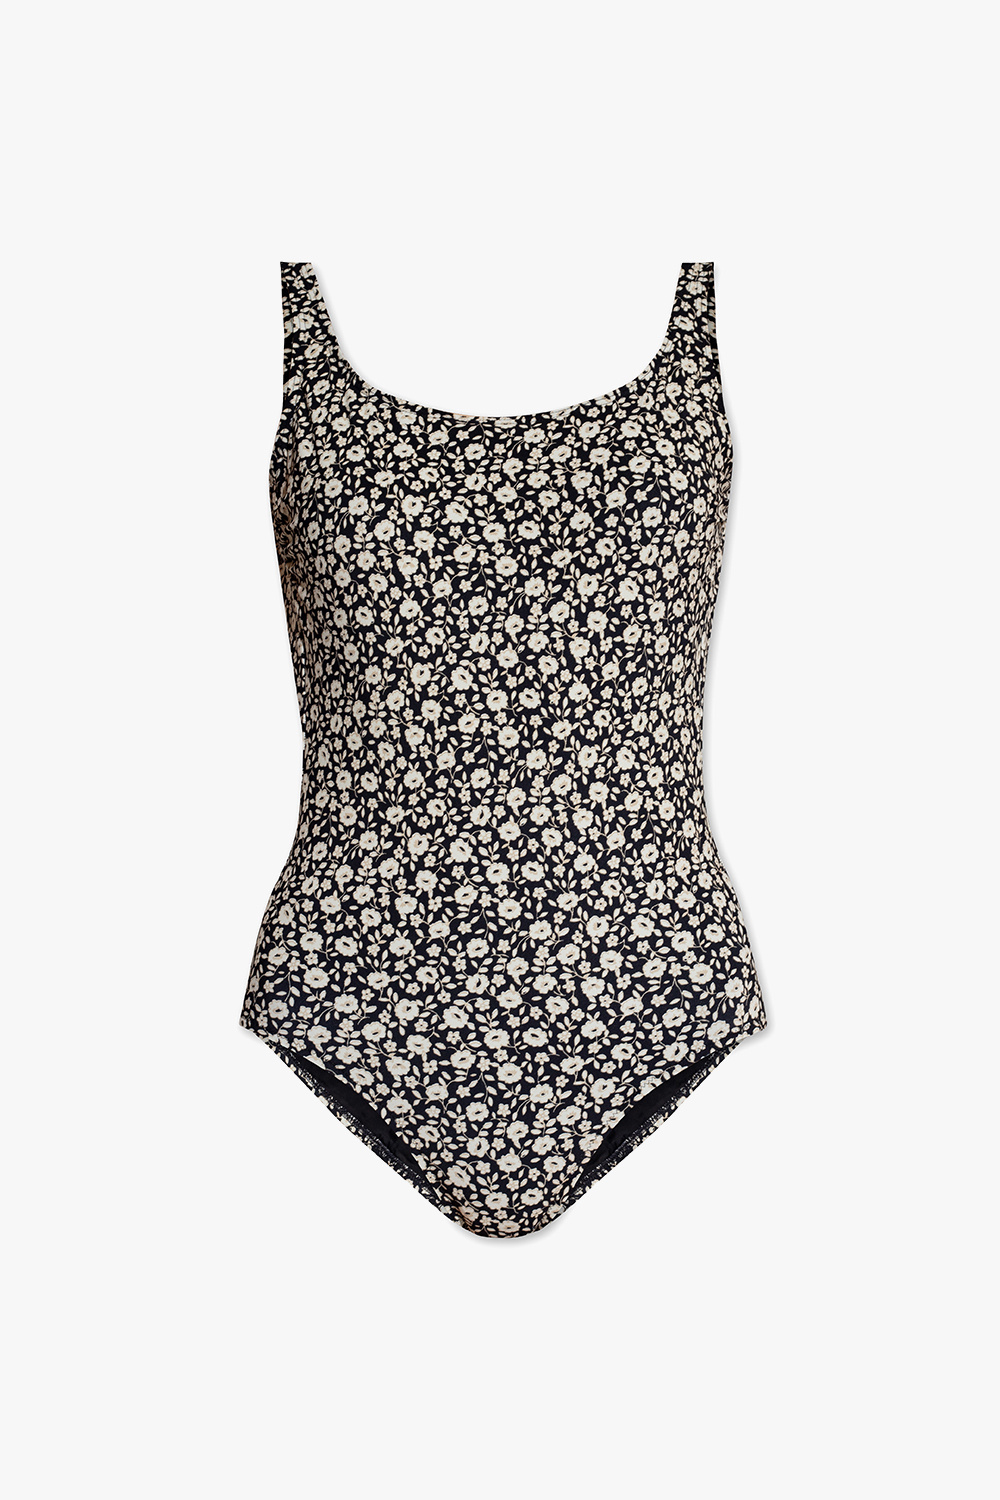 Tory Burch One-piece swimsuit | Women's Clothing | Vitkac